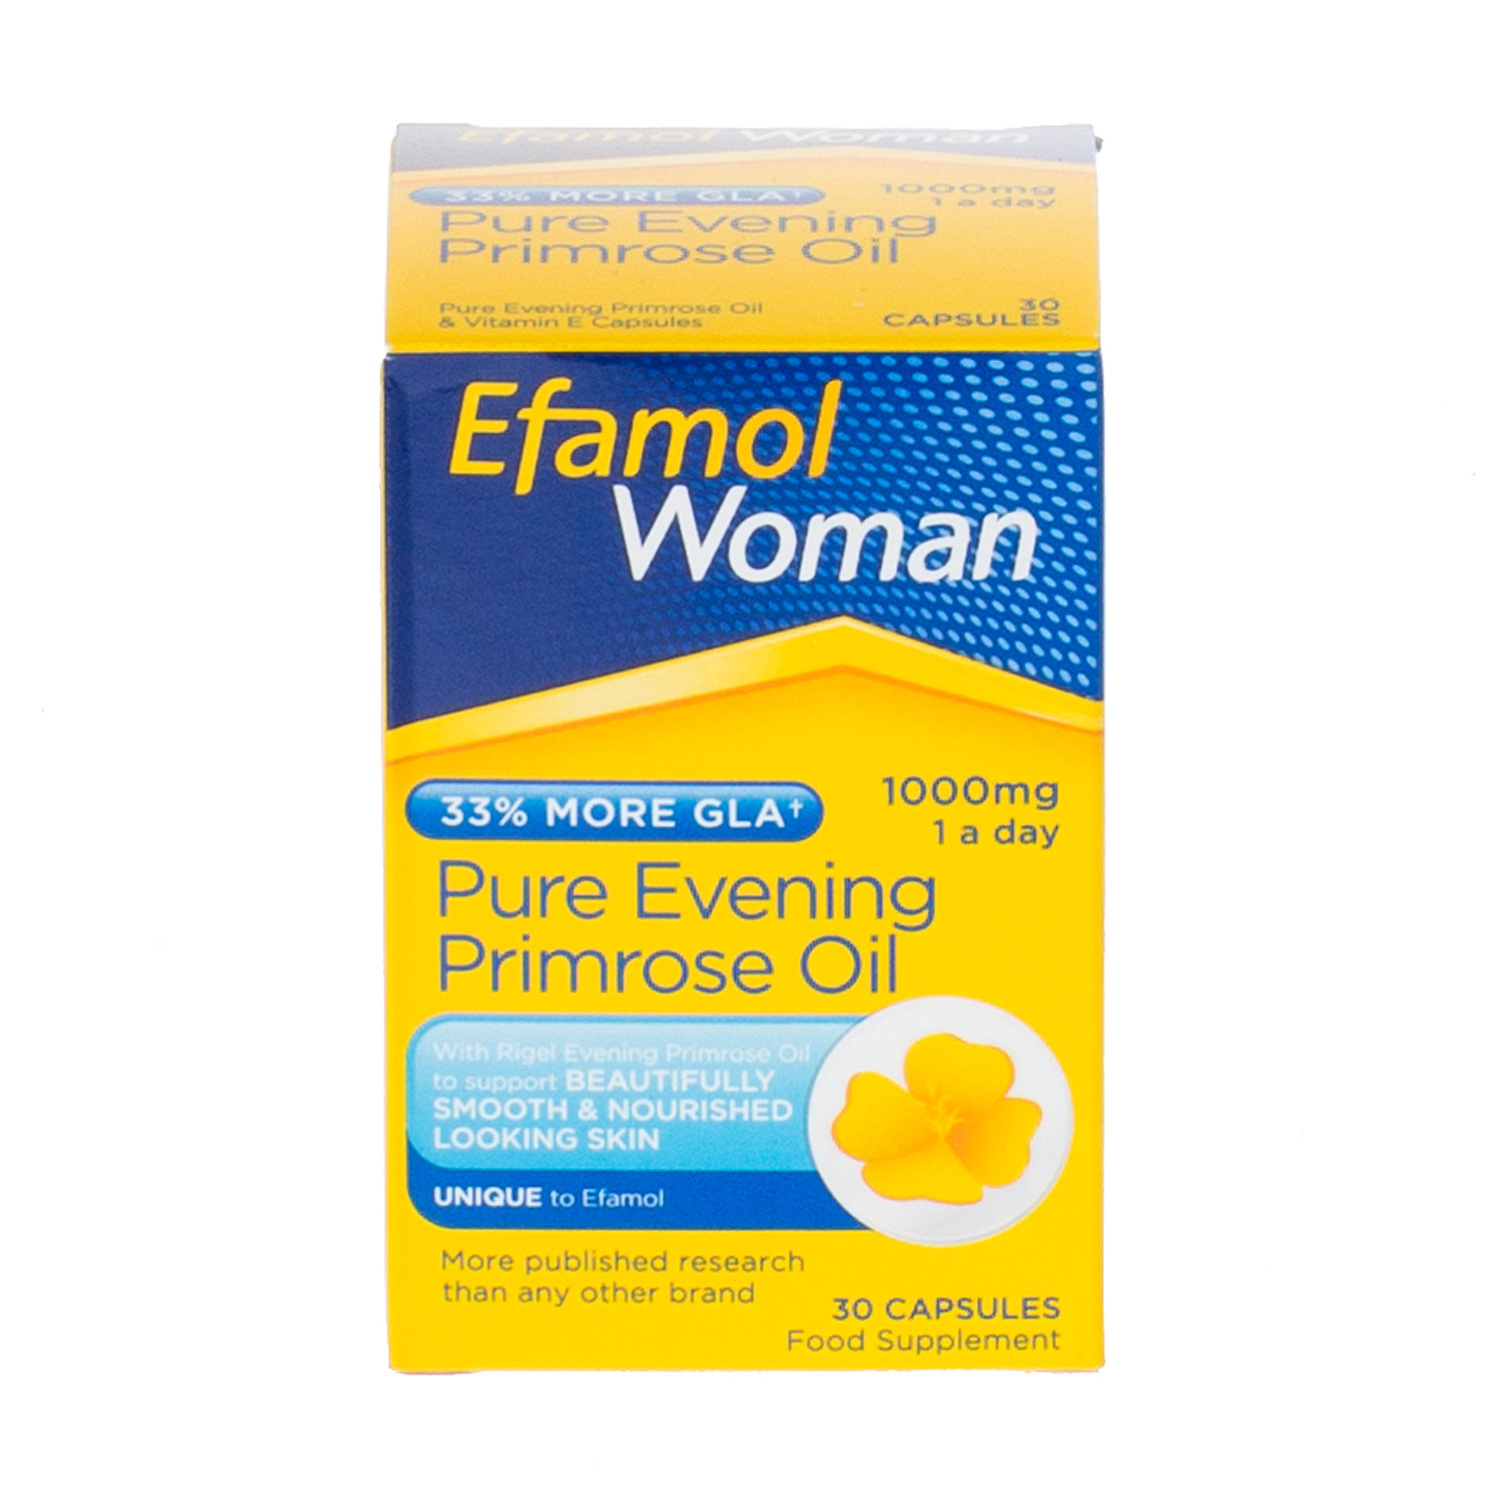 Efamol Woman Pure Evening Primrose Oil 1000mg